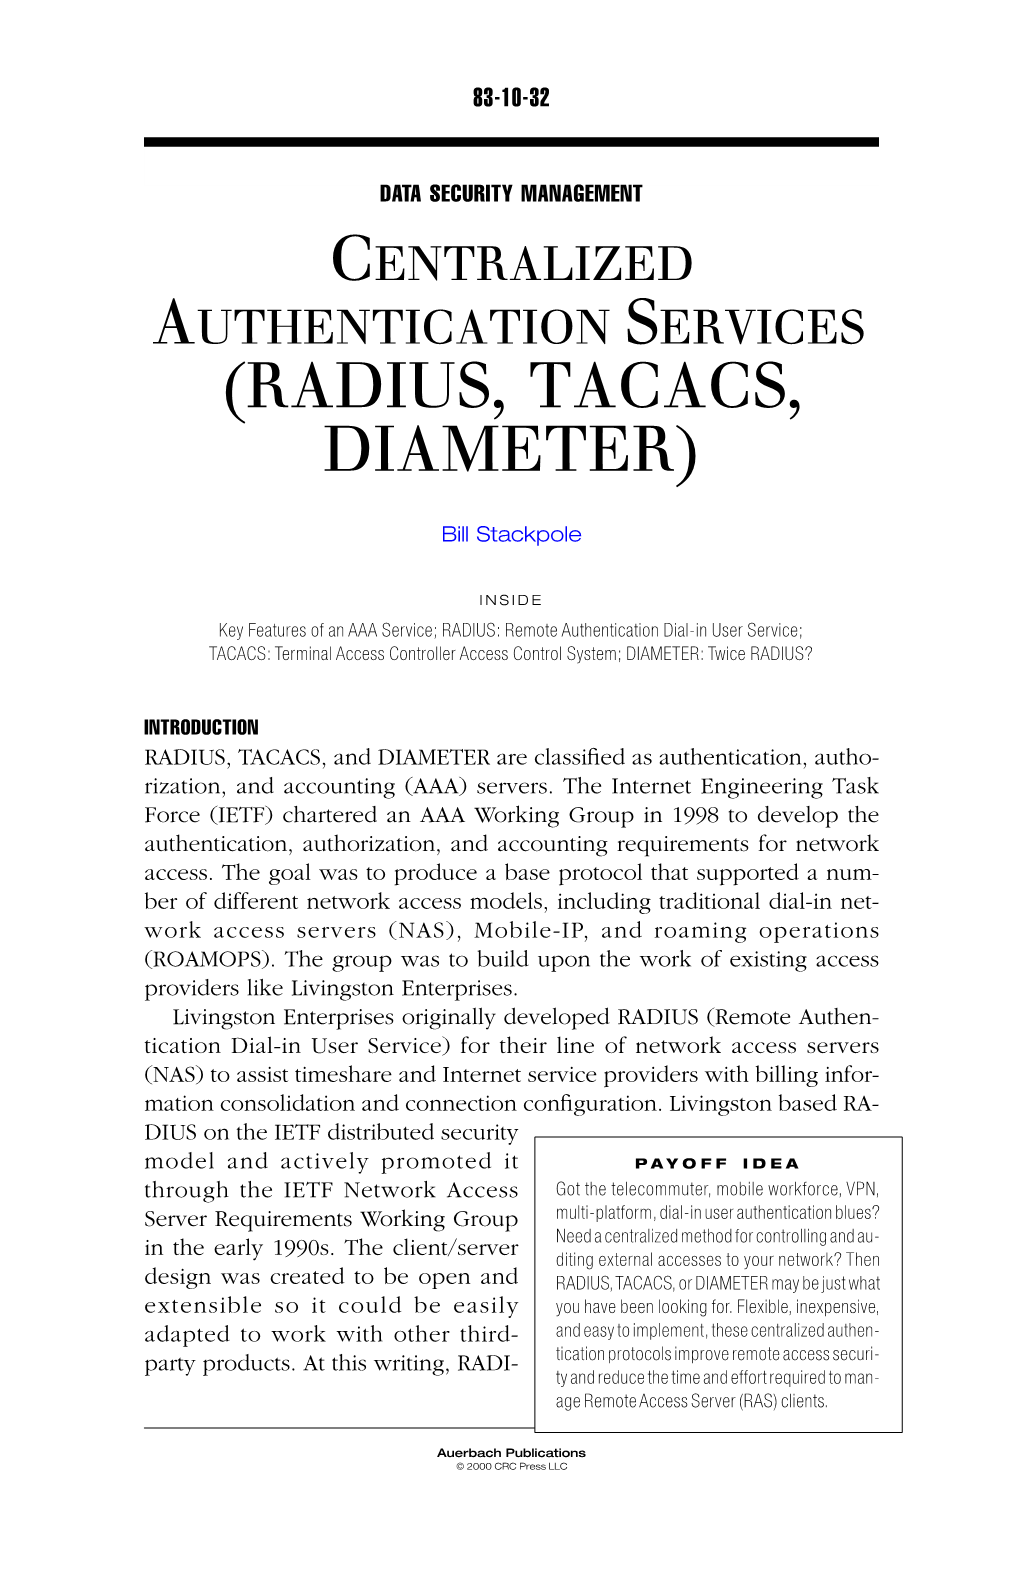 Centralized Authentication Services (Radius, Tacacs, Diameter)